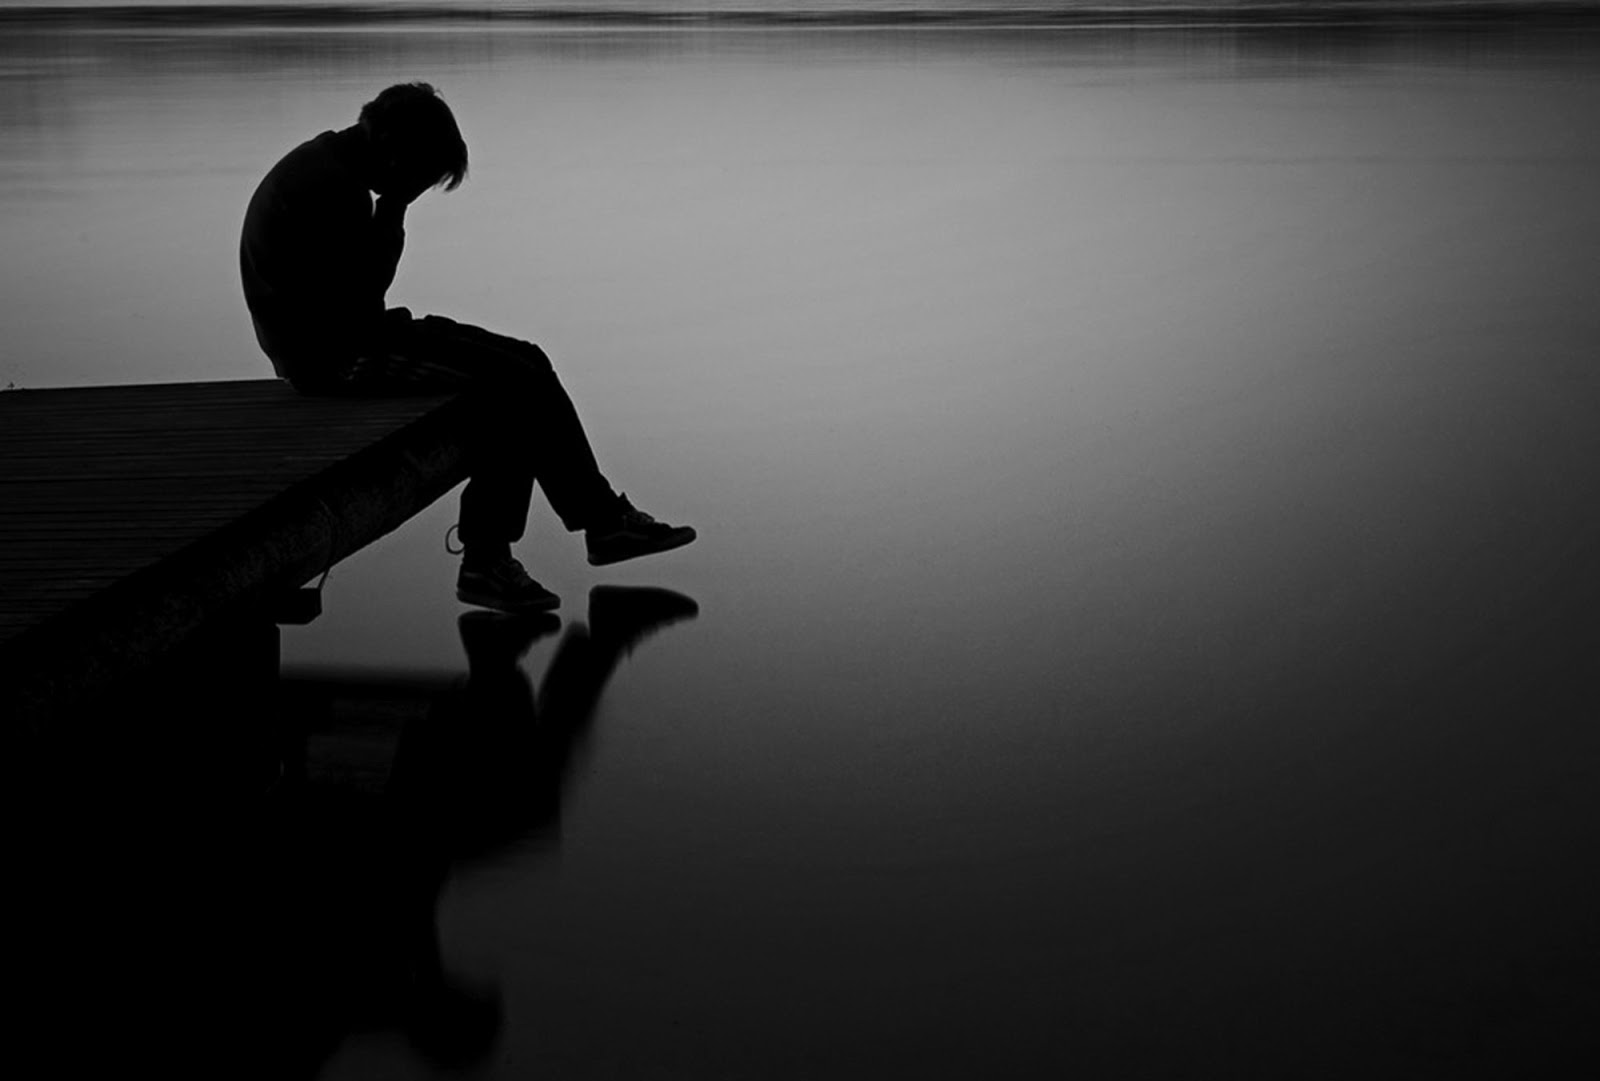 𝕃𝕚𝕥𝕥𝕝𝕖𝕓𝕦𝕘𝟛𝟞𝟝 ᵕᴗᵕ ภาพน่ารัก ภาพสวยๆ: รูปภาพเศร้า เสียใจ Sad เหงา  โดดเดี่ยว Lonely